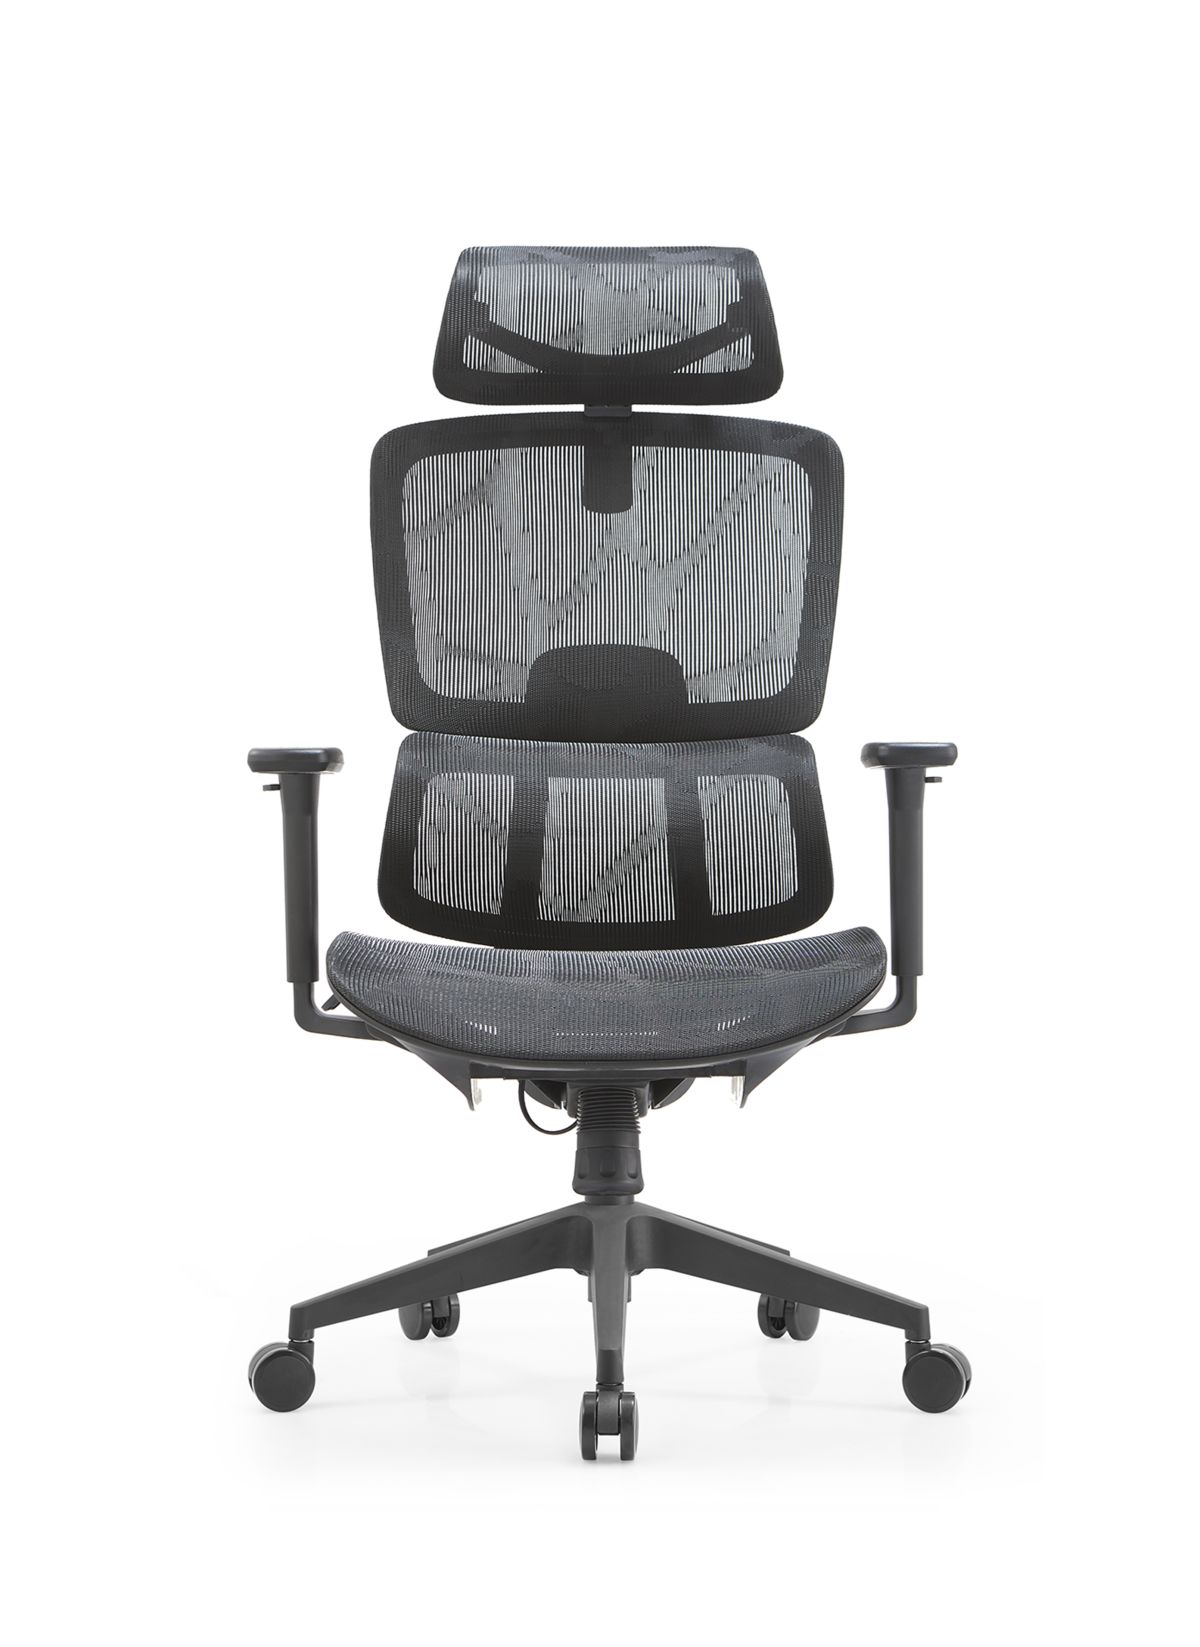 Cadeira ergonômica Herman Miller (1)